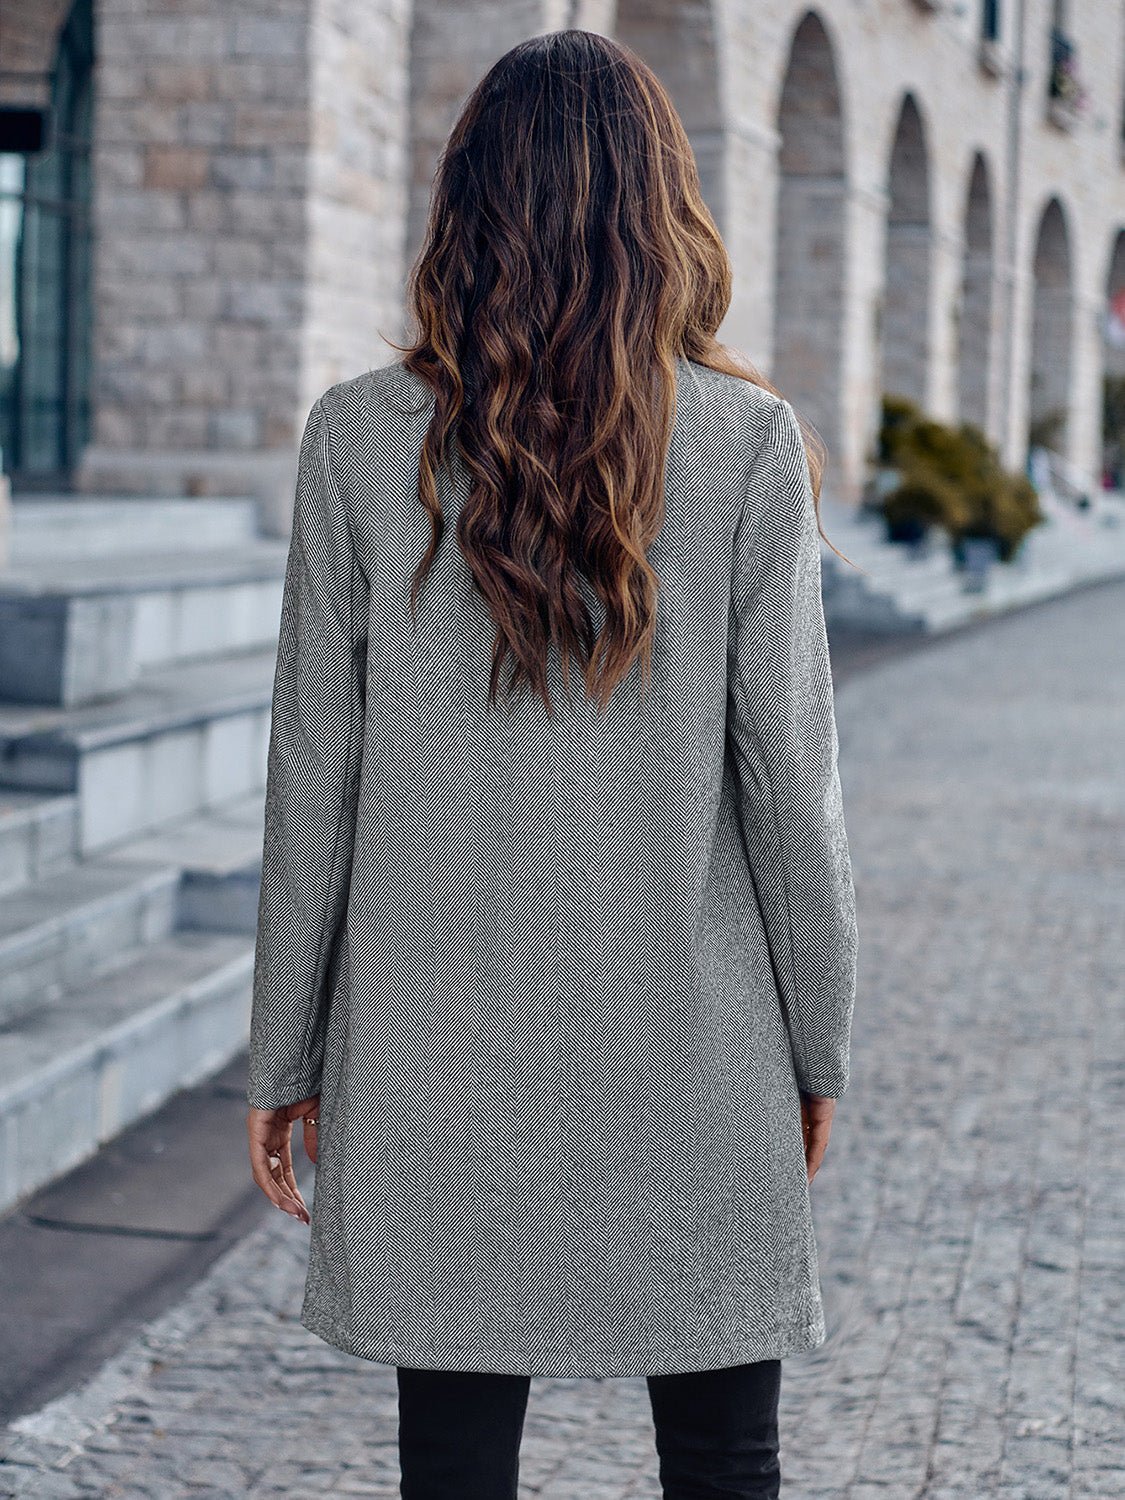 Open Front Long Sleeve Blazer - Fashion Girl Online Store